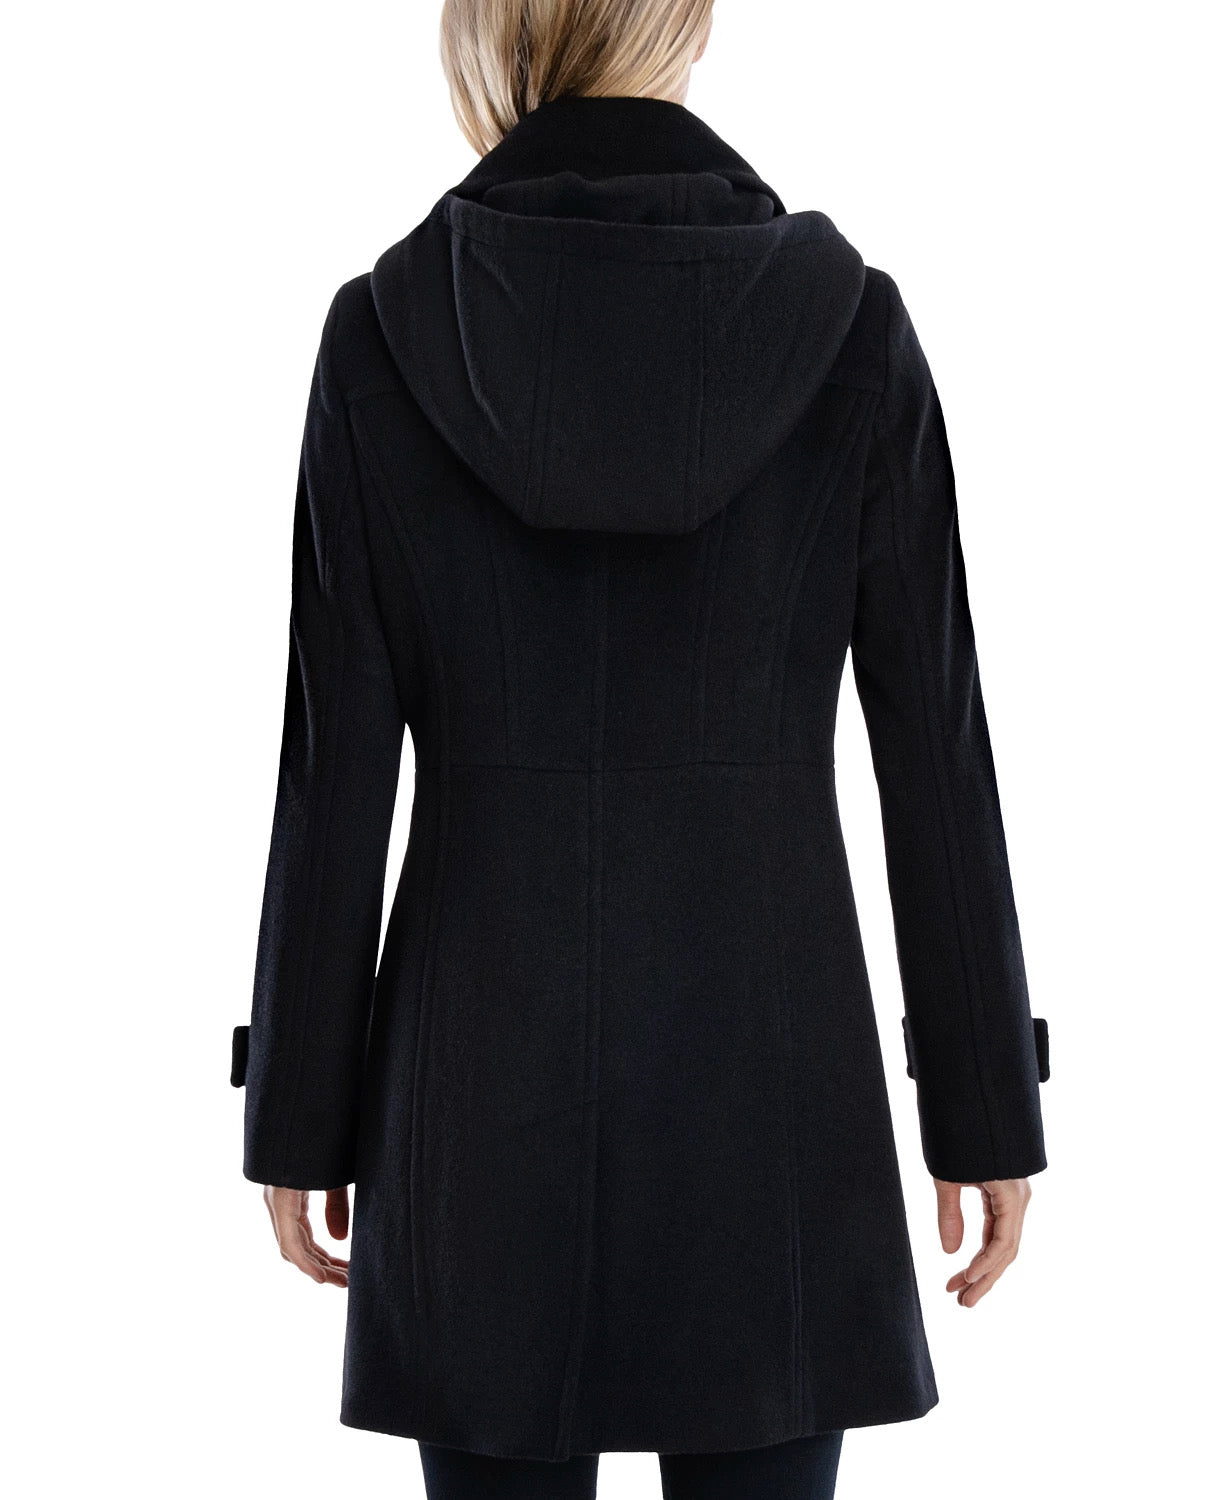 MICHAEL Kors Women's Zip Hooded Coat Black Petite Small Black PS